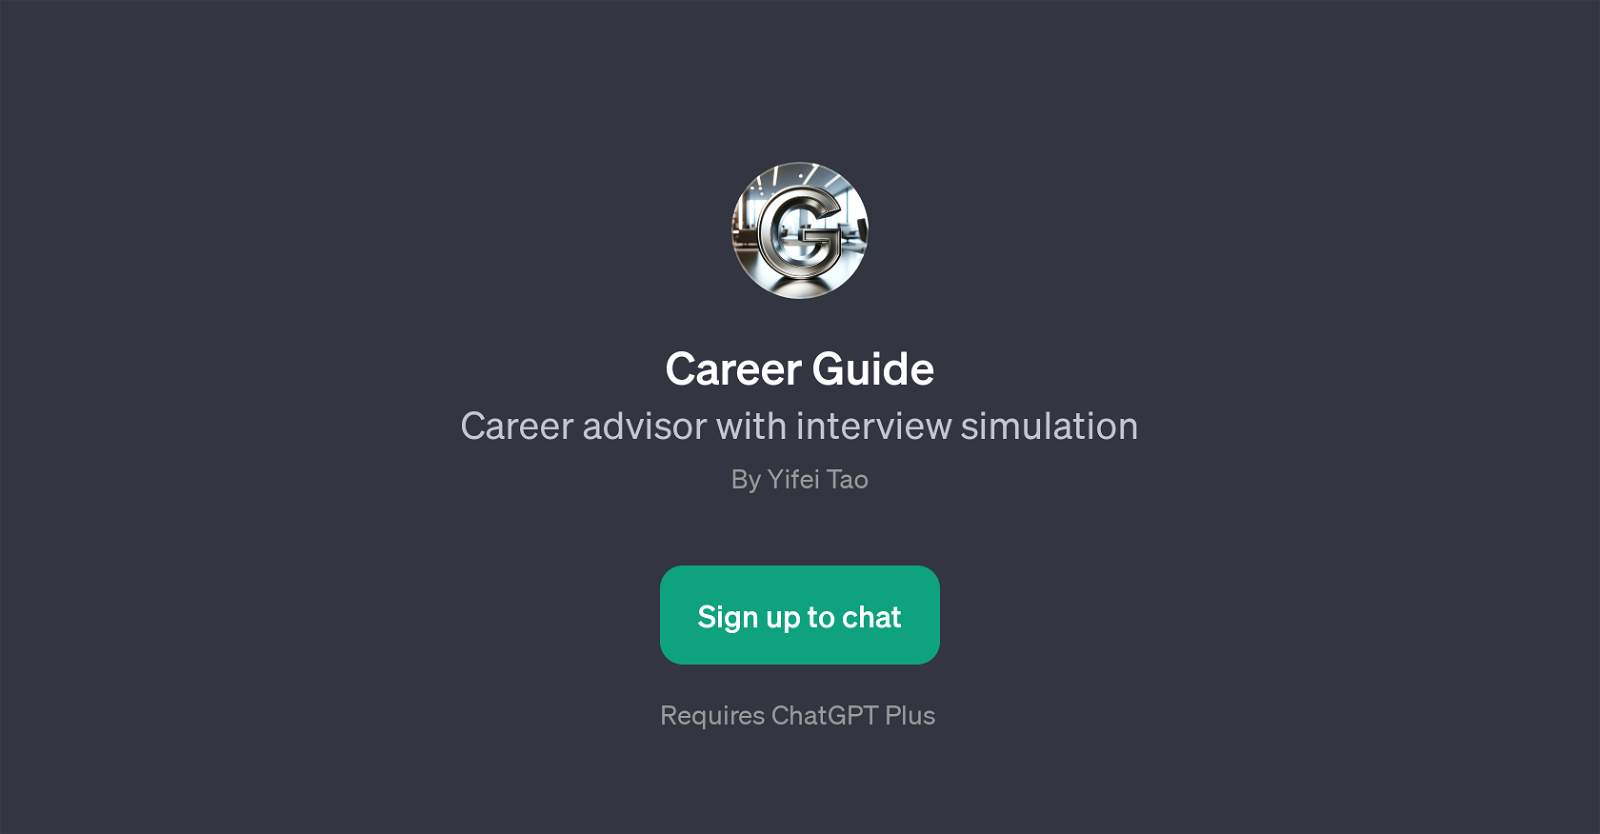 Career Guide website